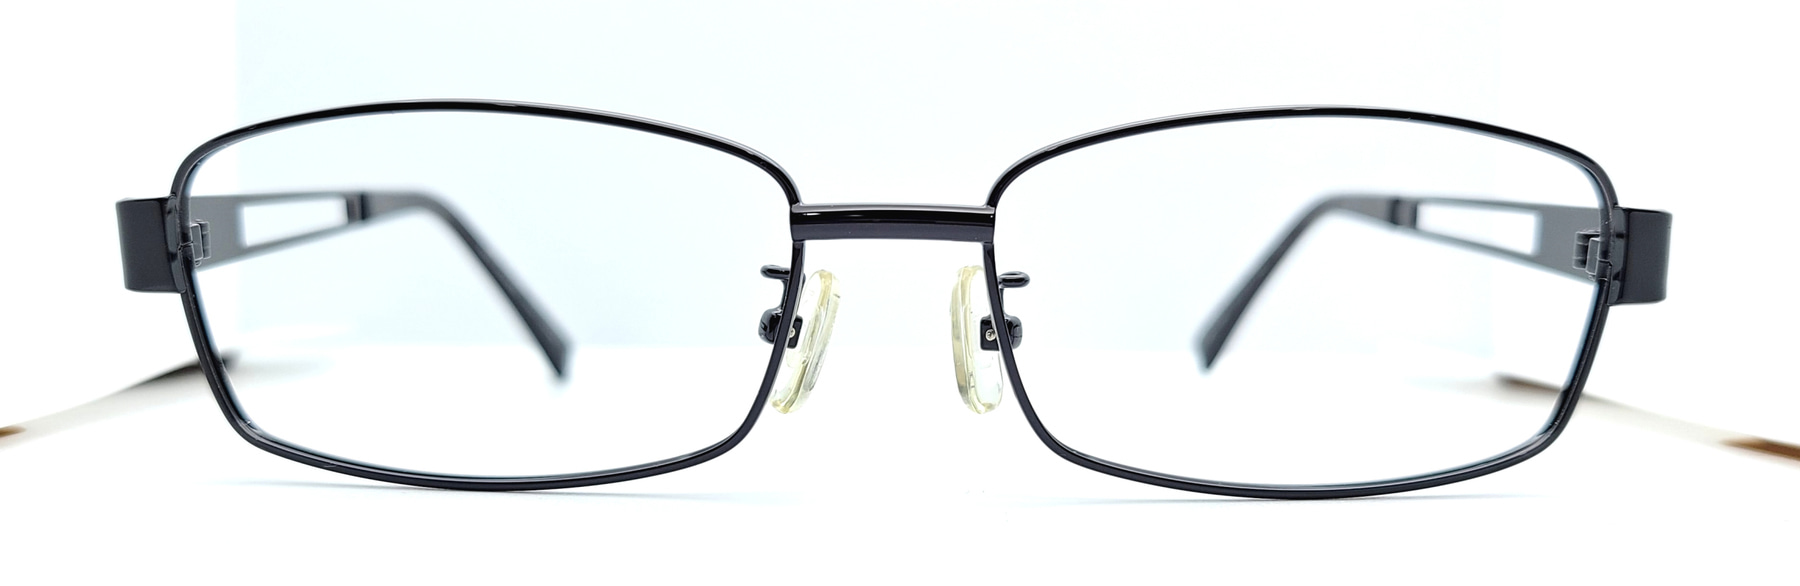 MINIHOUSE M-1047, Korean glasses, sunglasses, eyeglasses, glasses